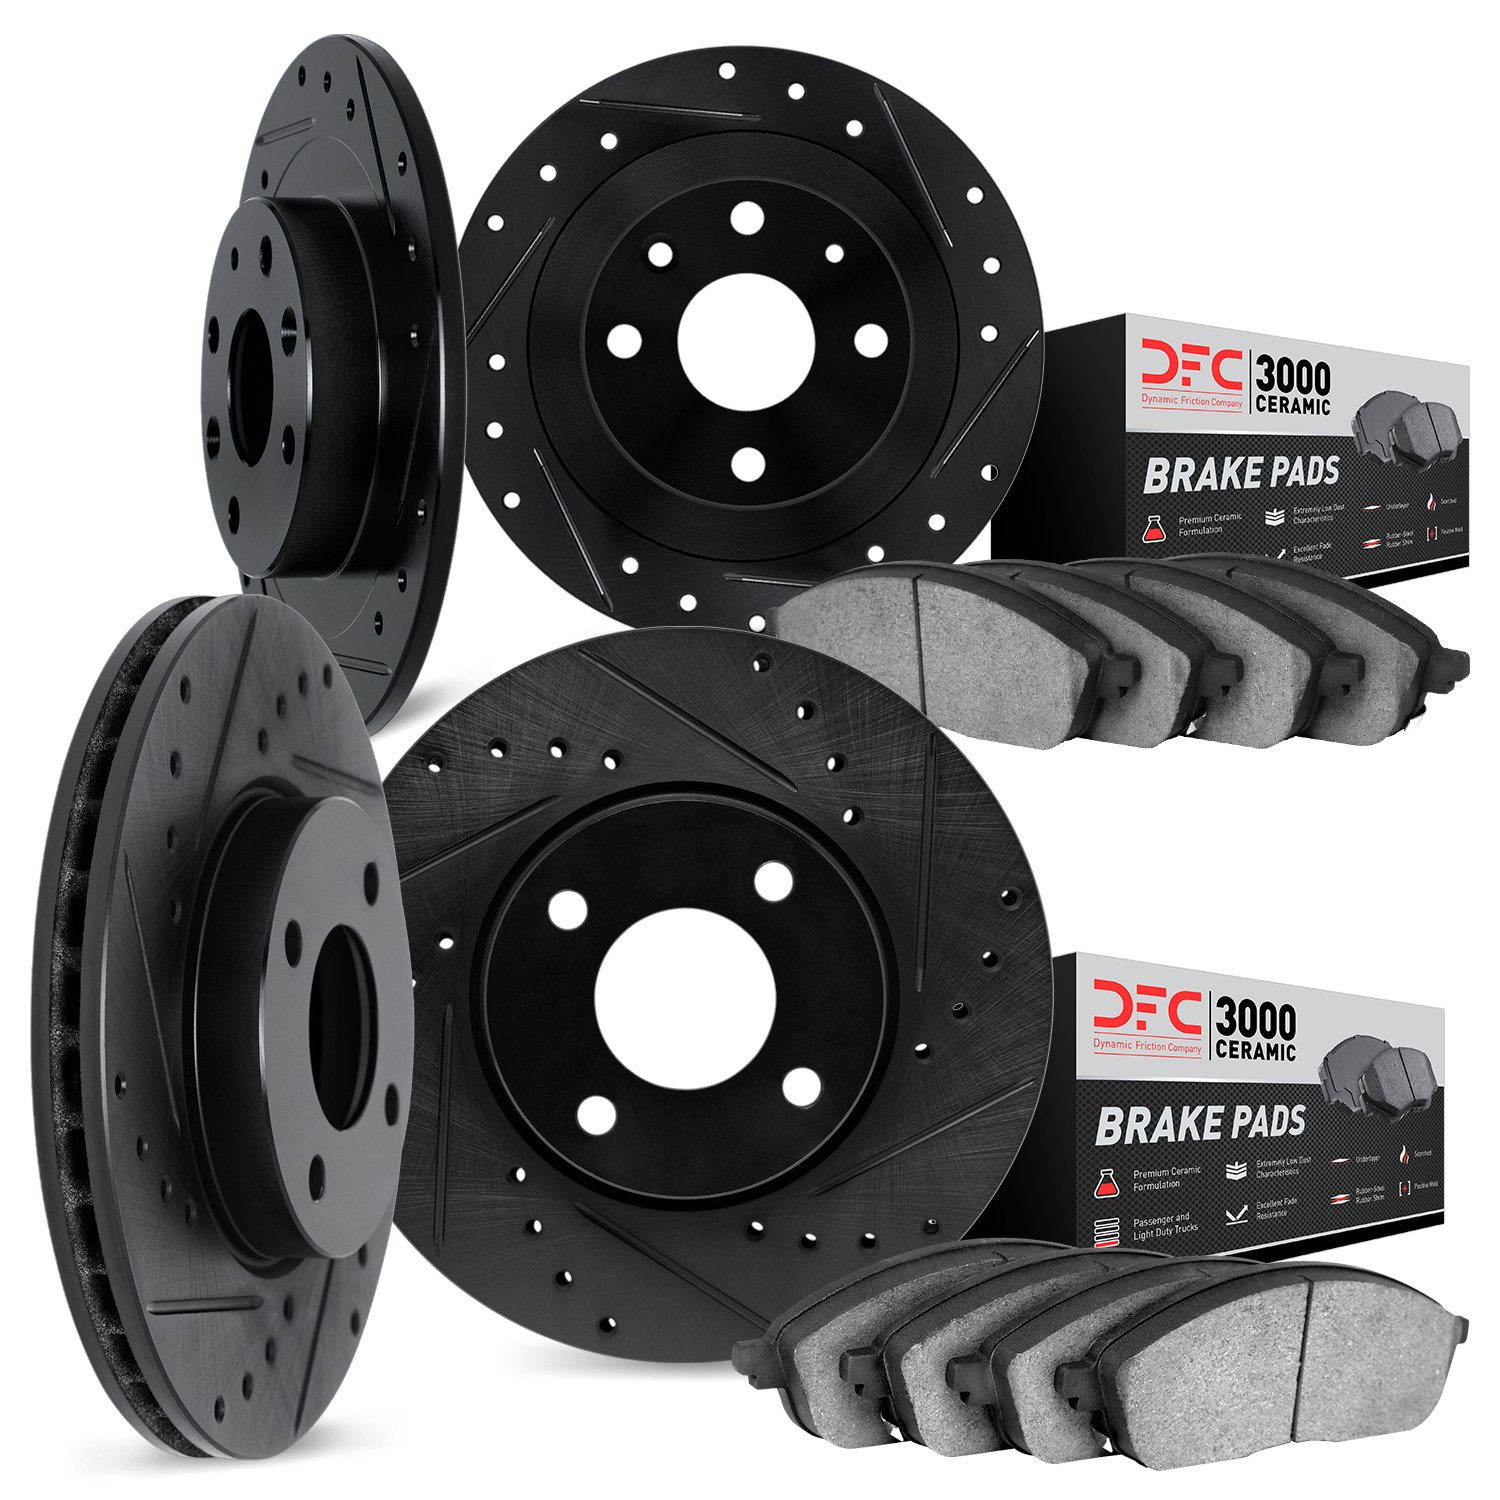 8304-80035 Drilled/Slotted Brake Rotors with 3000-Series Ceramic Brake Pads Kit [Black], Fits Select Multiple Makes/Models, Posi